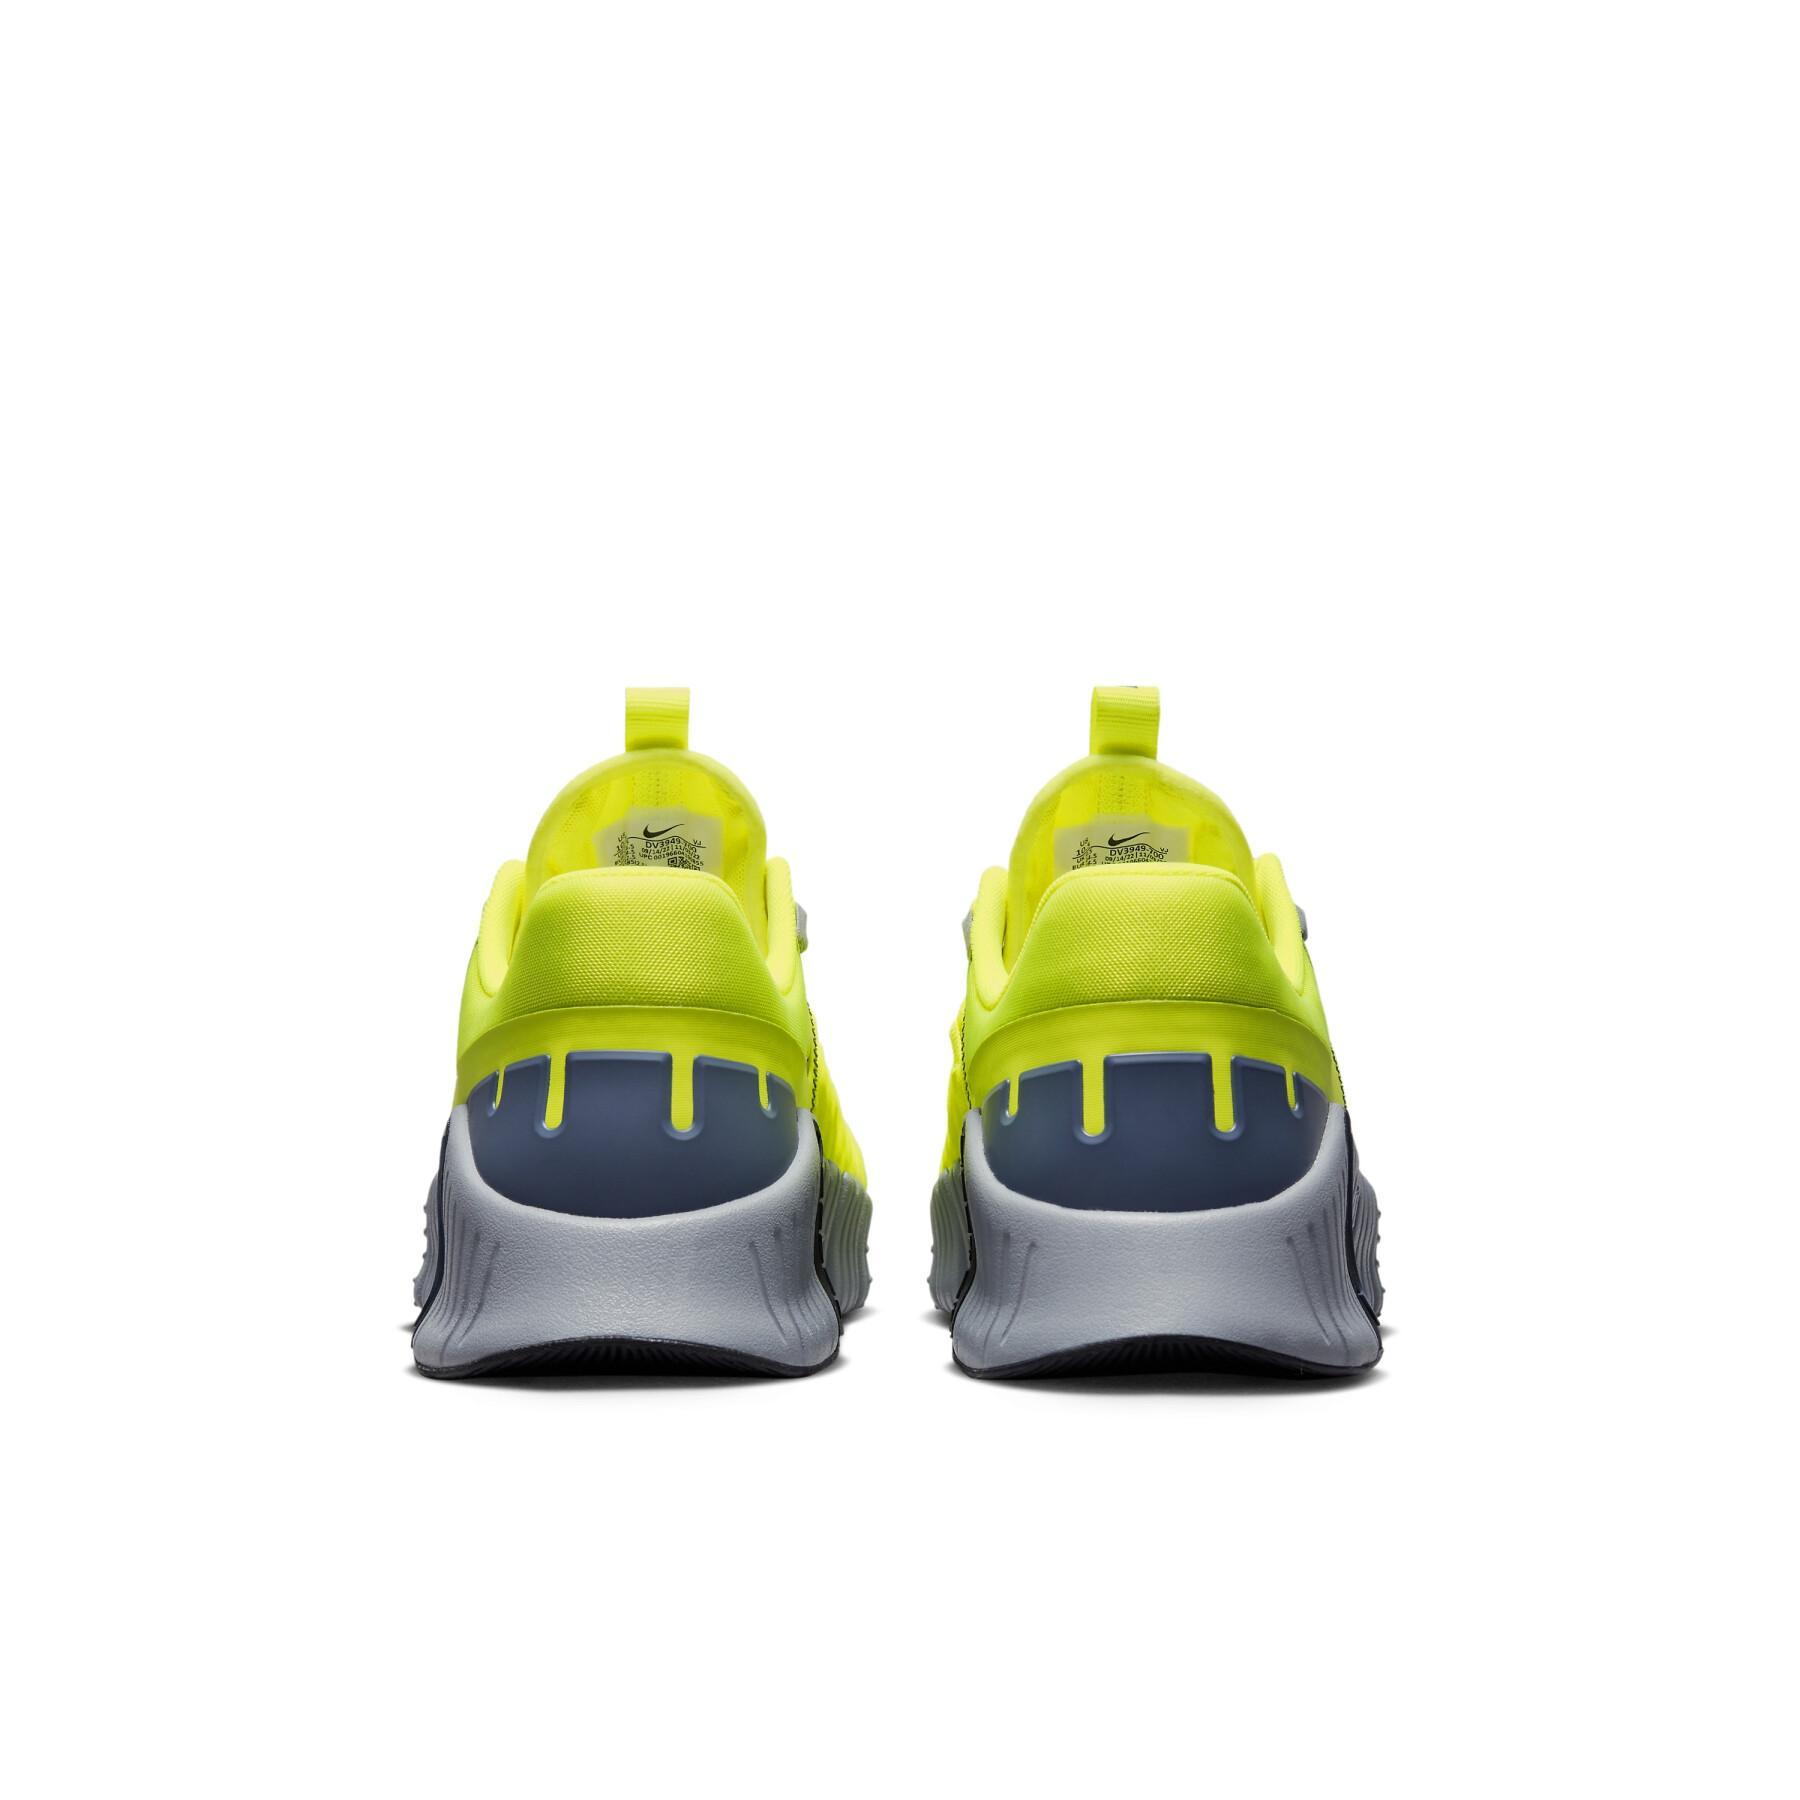 Cross training shoes Nike Free Metcon 5